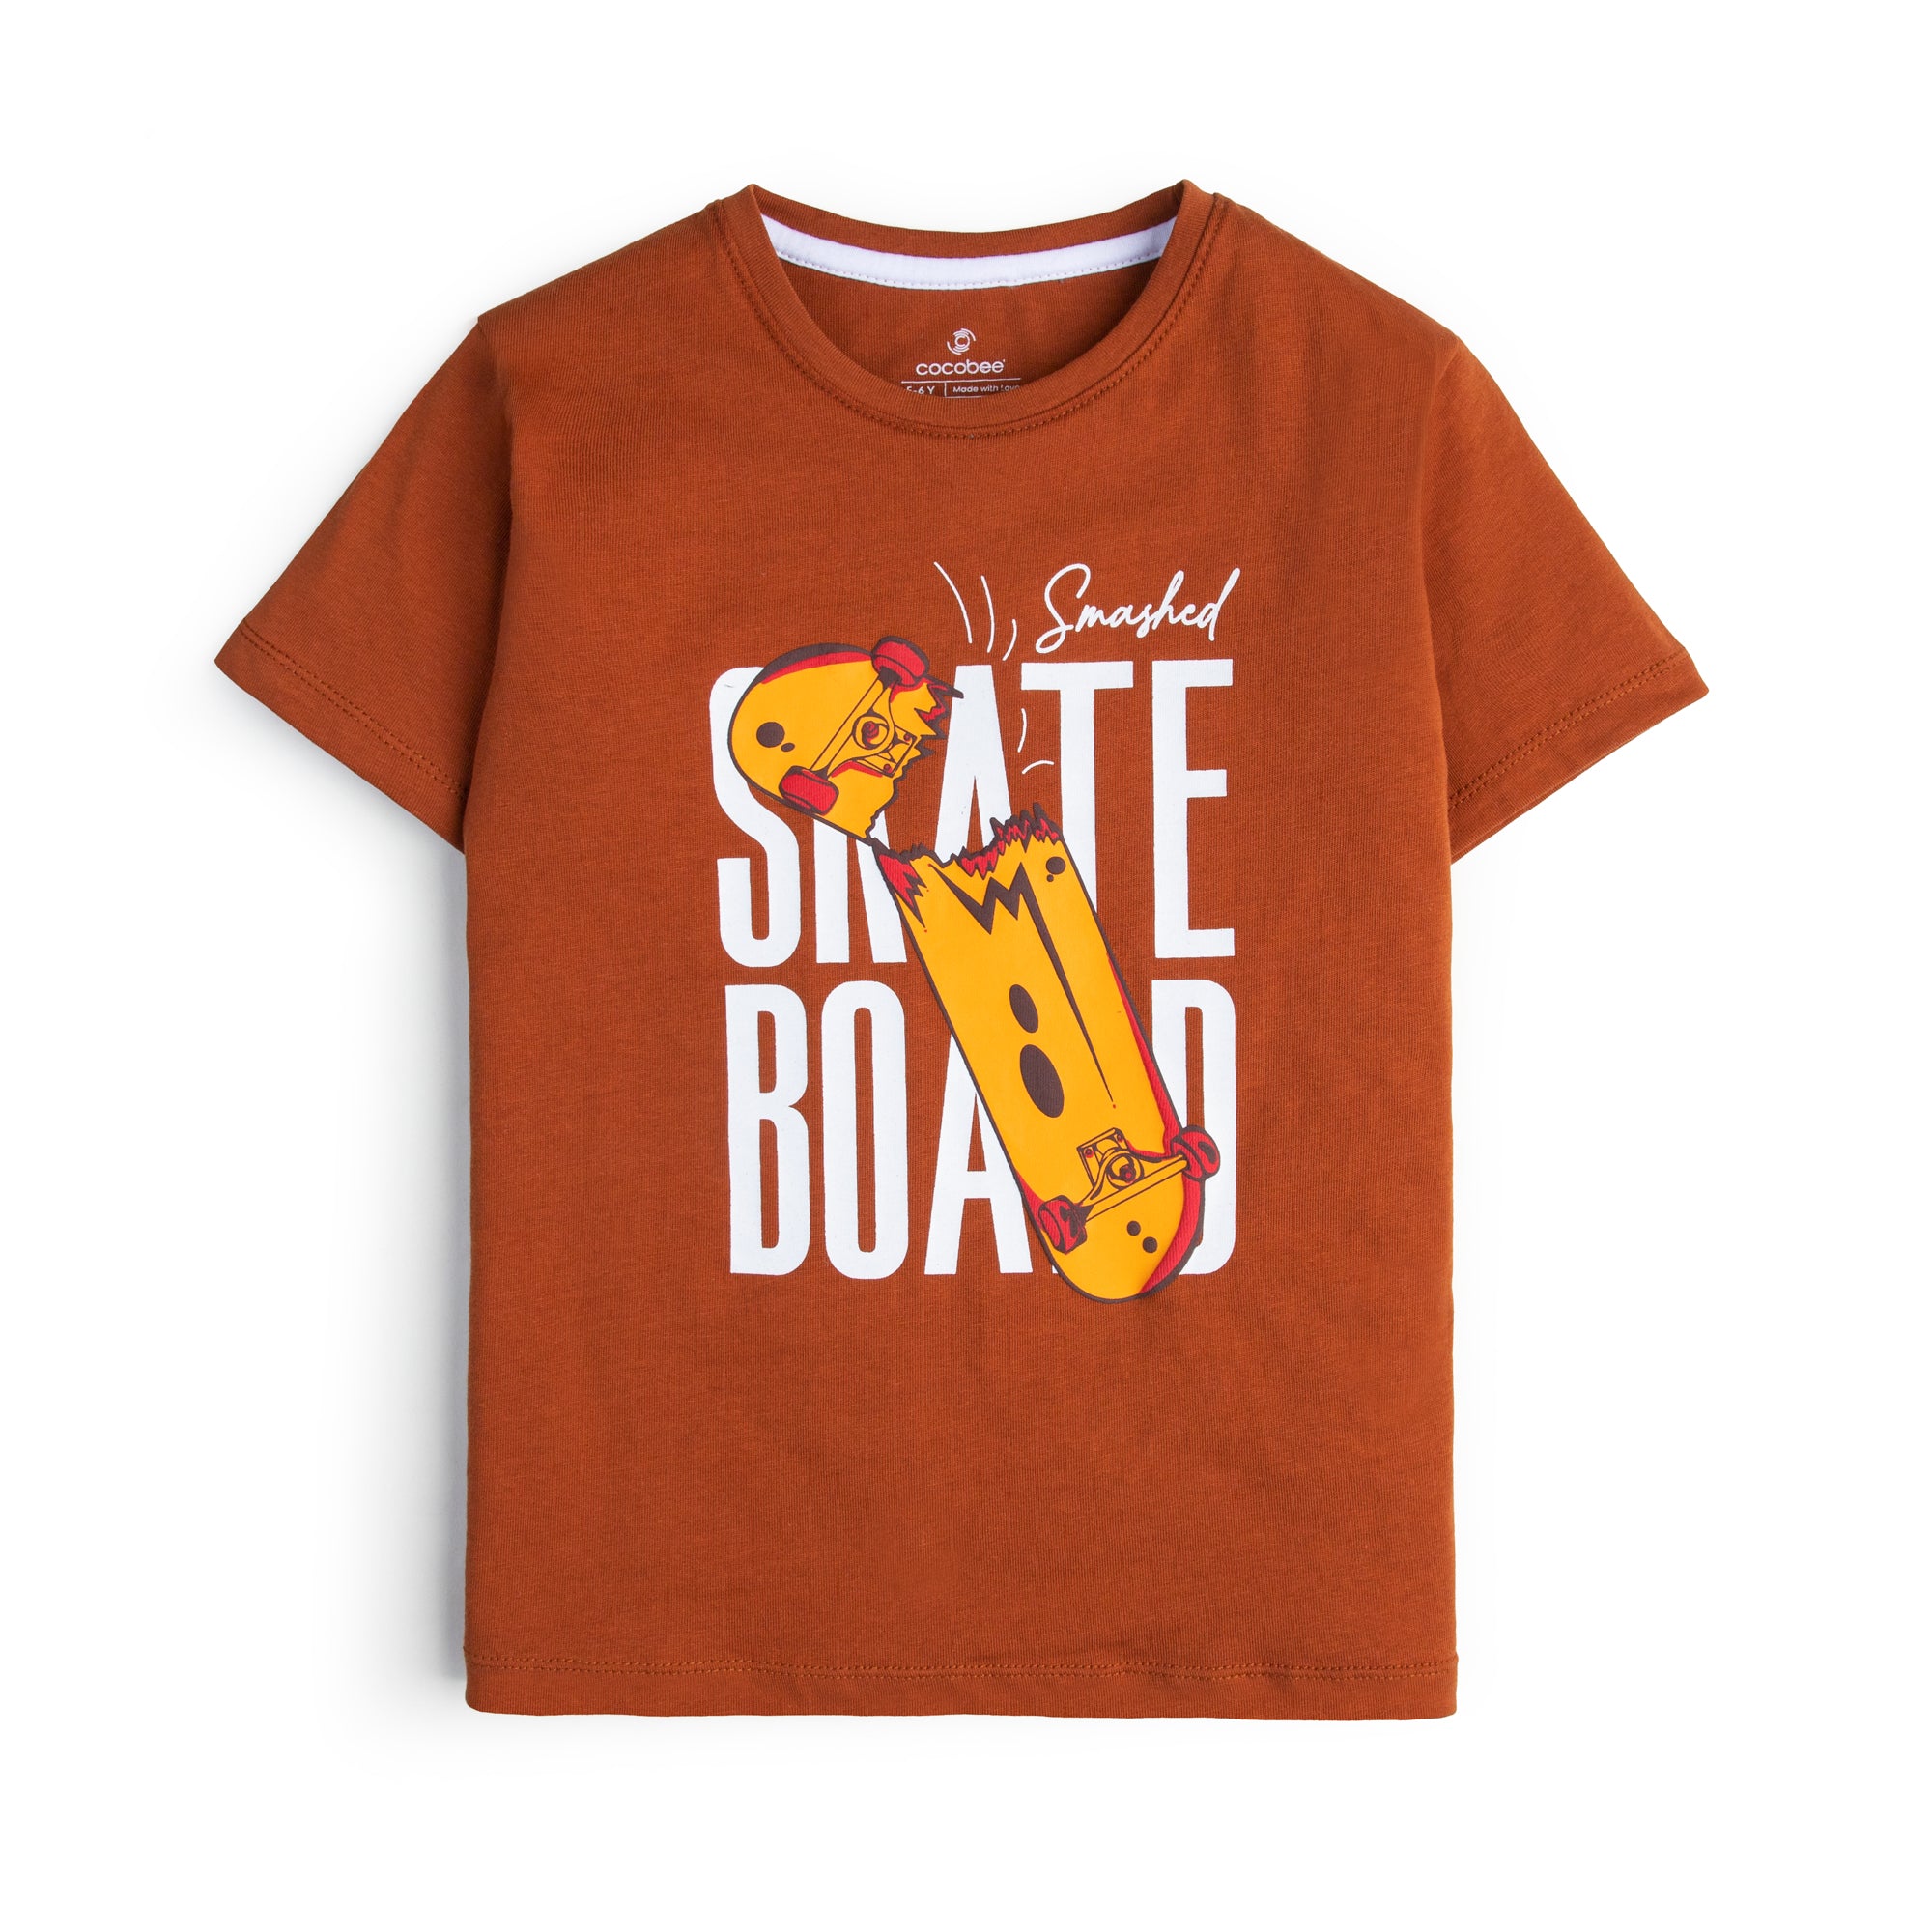 Skating Spice T-shirt